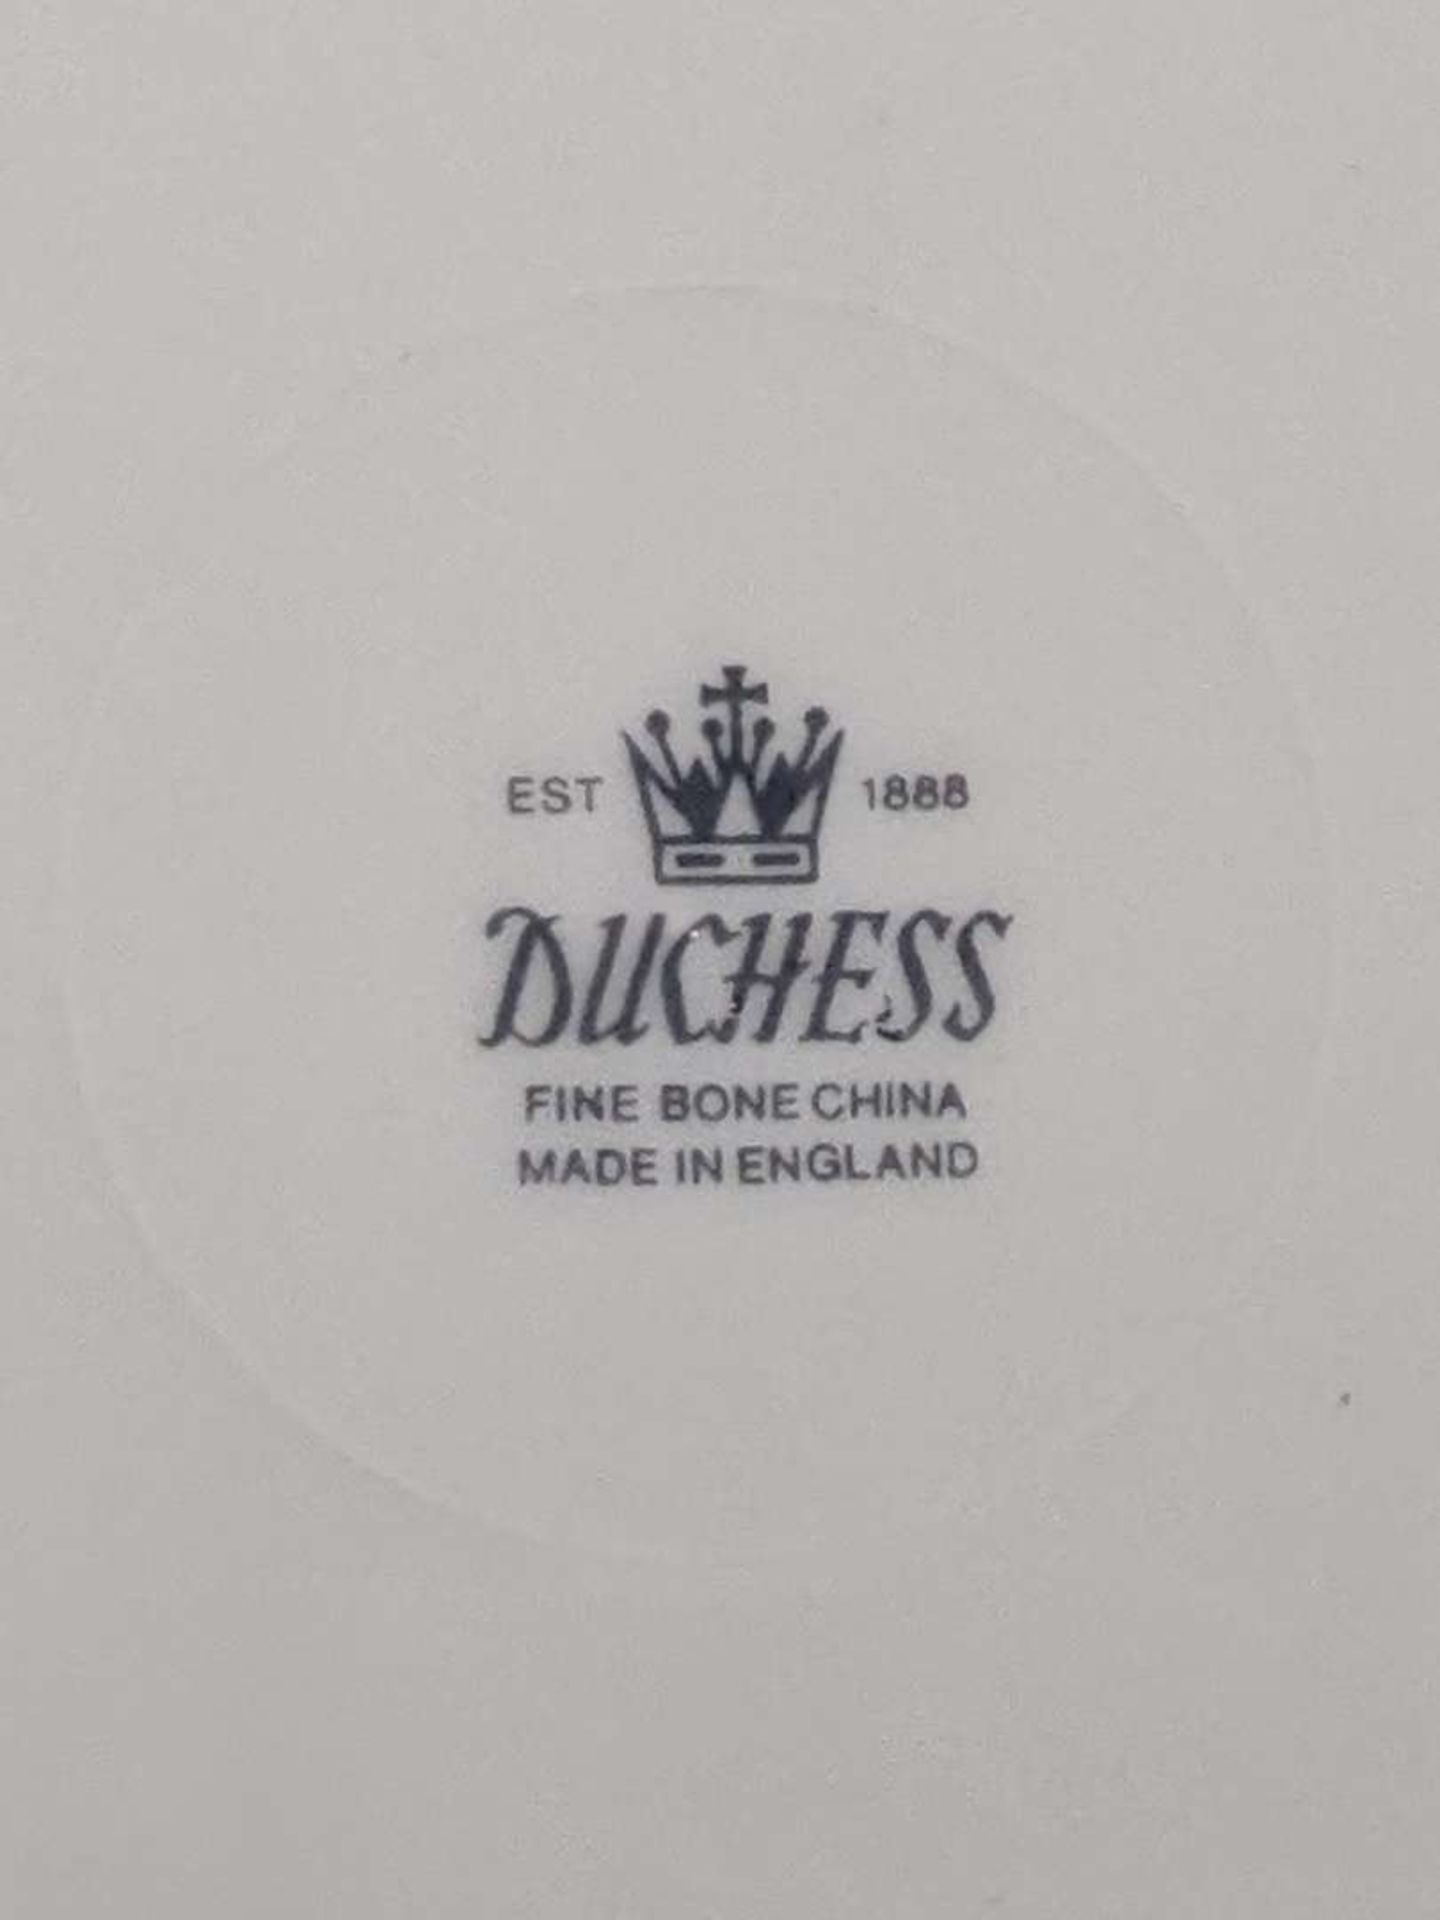 DUCHESS Dinner Plate - Image 2 of 2